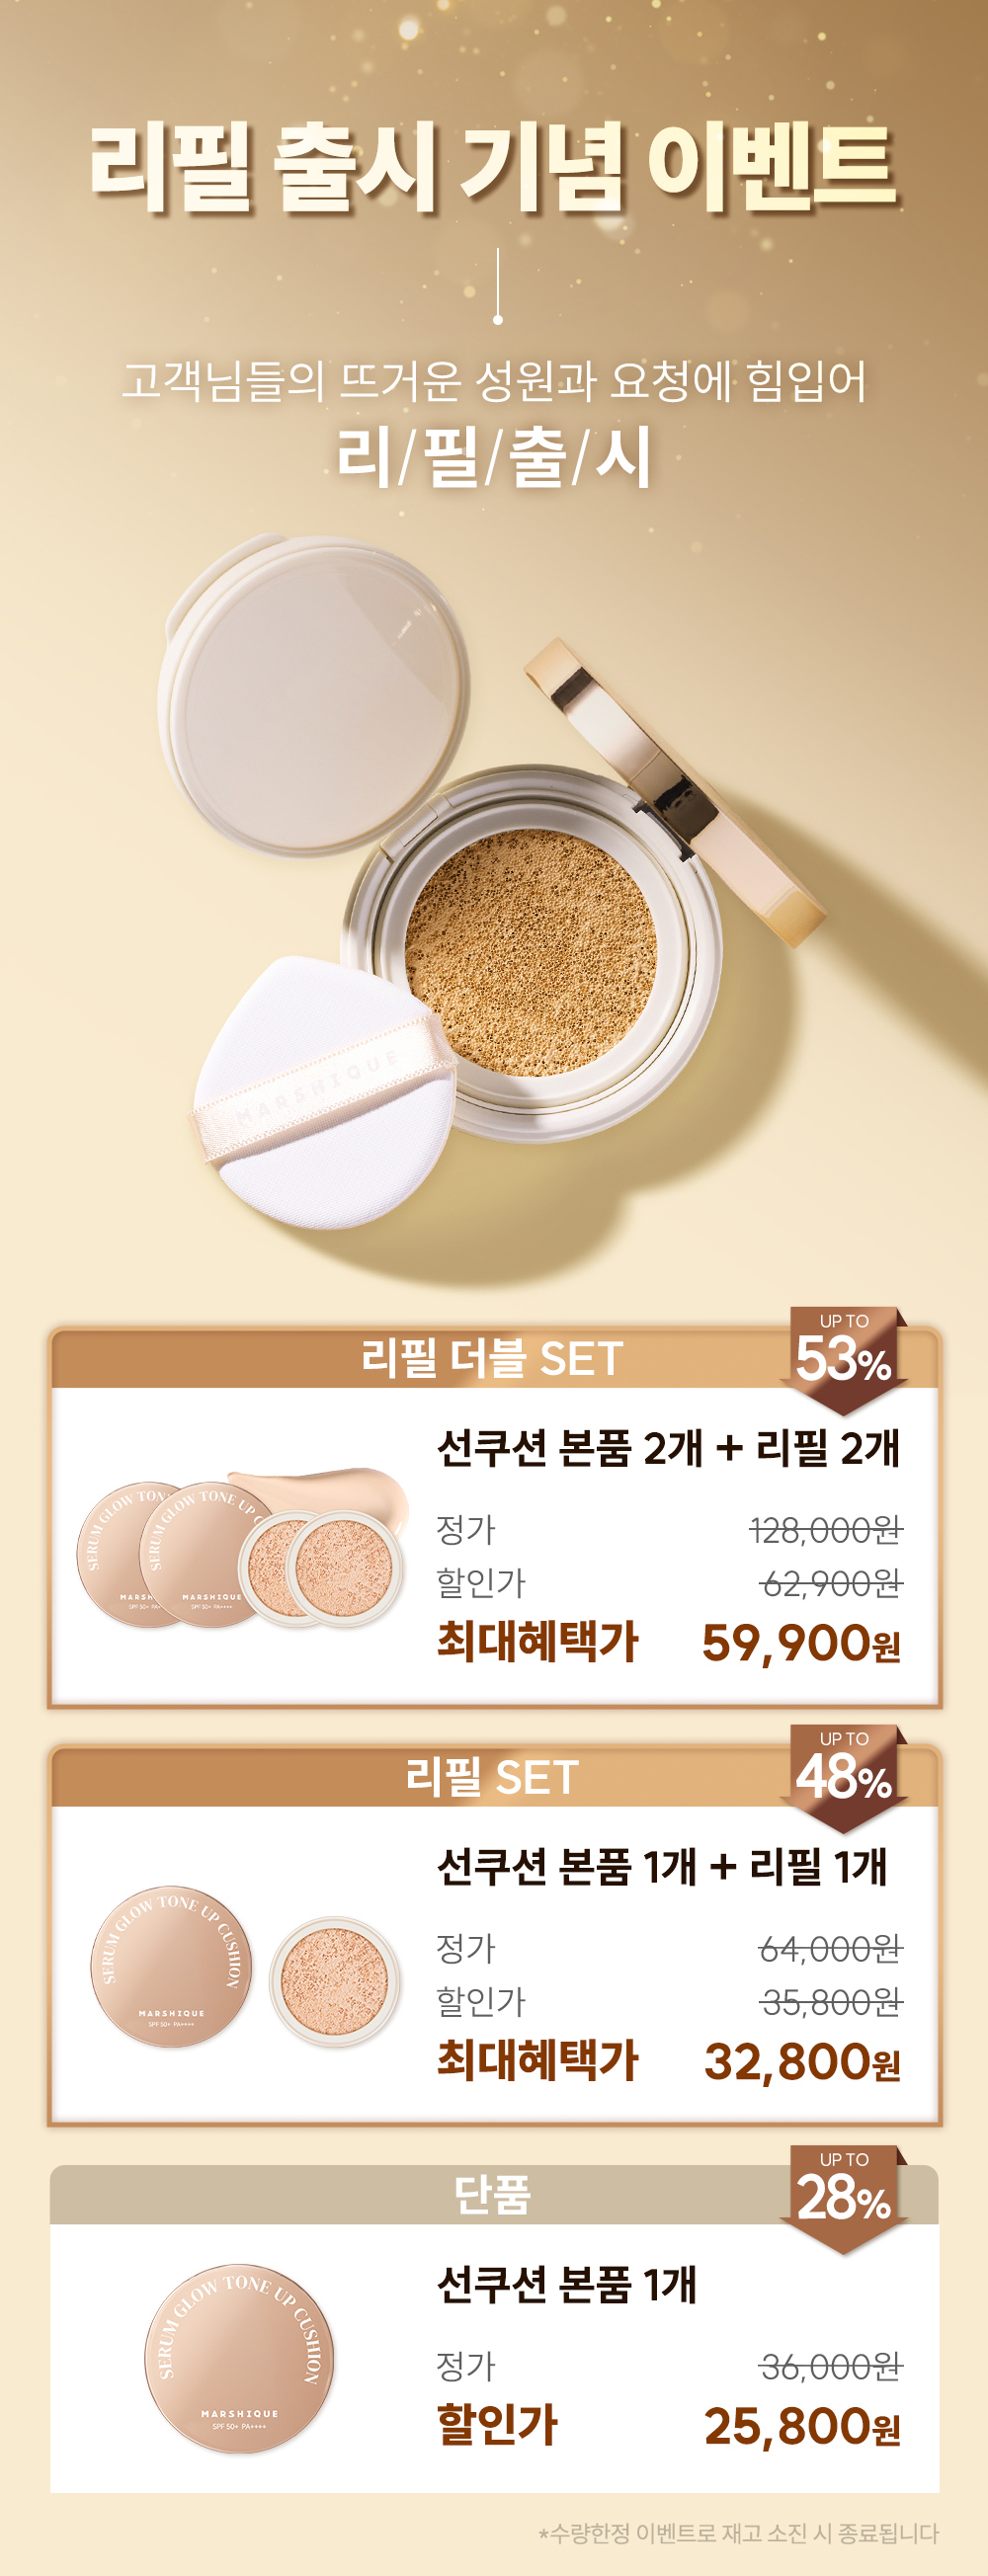 cosmetics product image-S205L1